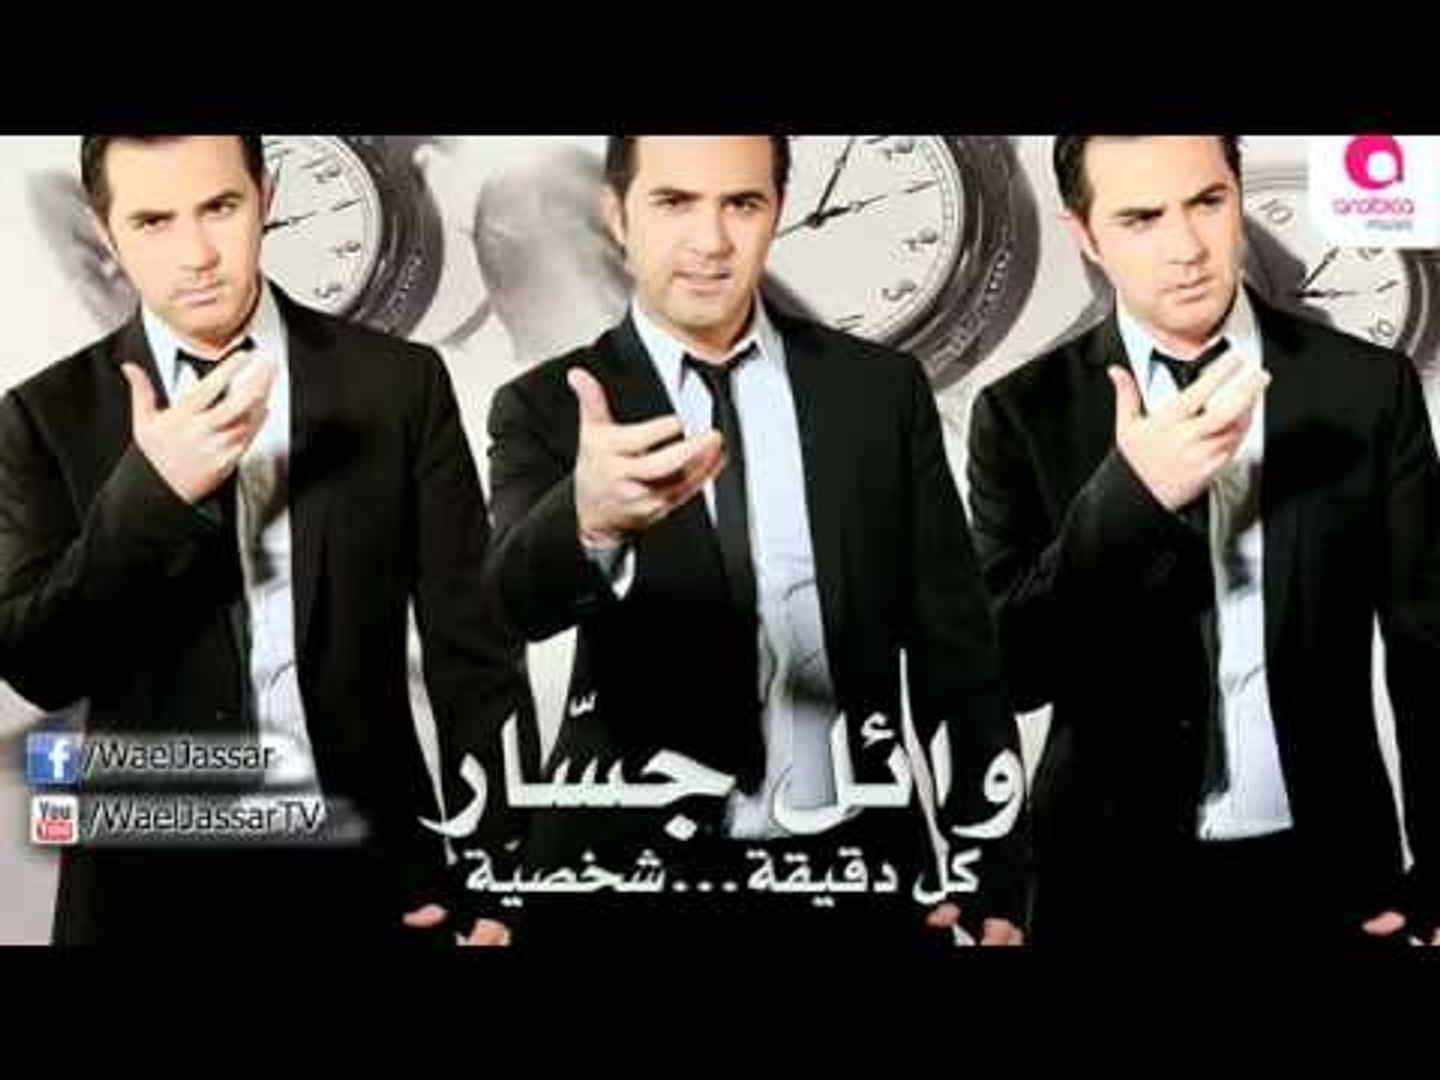 Wael Jassar - Mawgo' / وائل جسار - موجوع (جرح الماضي) - video Dailymotion